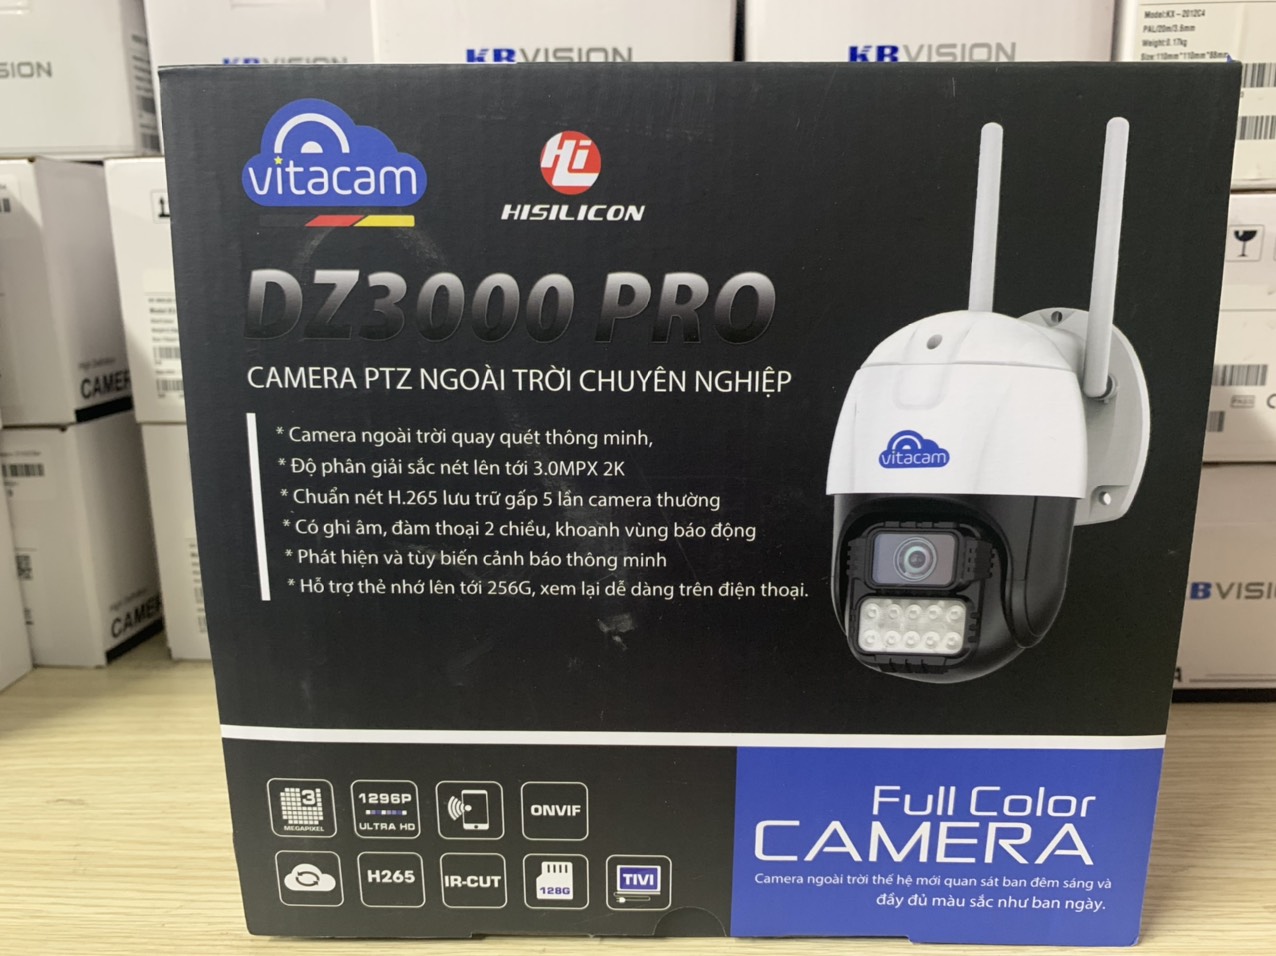 Camera VITACAM DZ3000 PRO - 3.0M